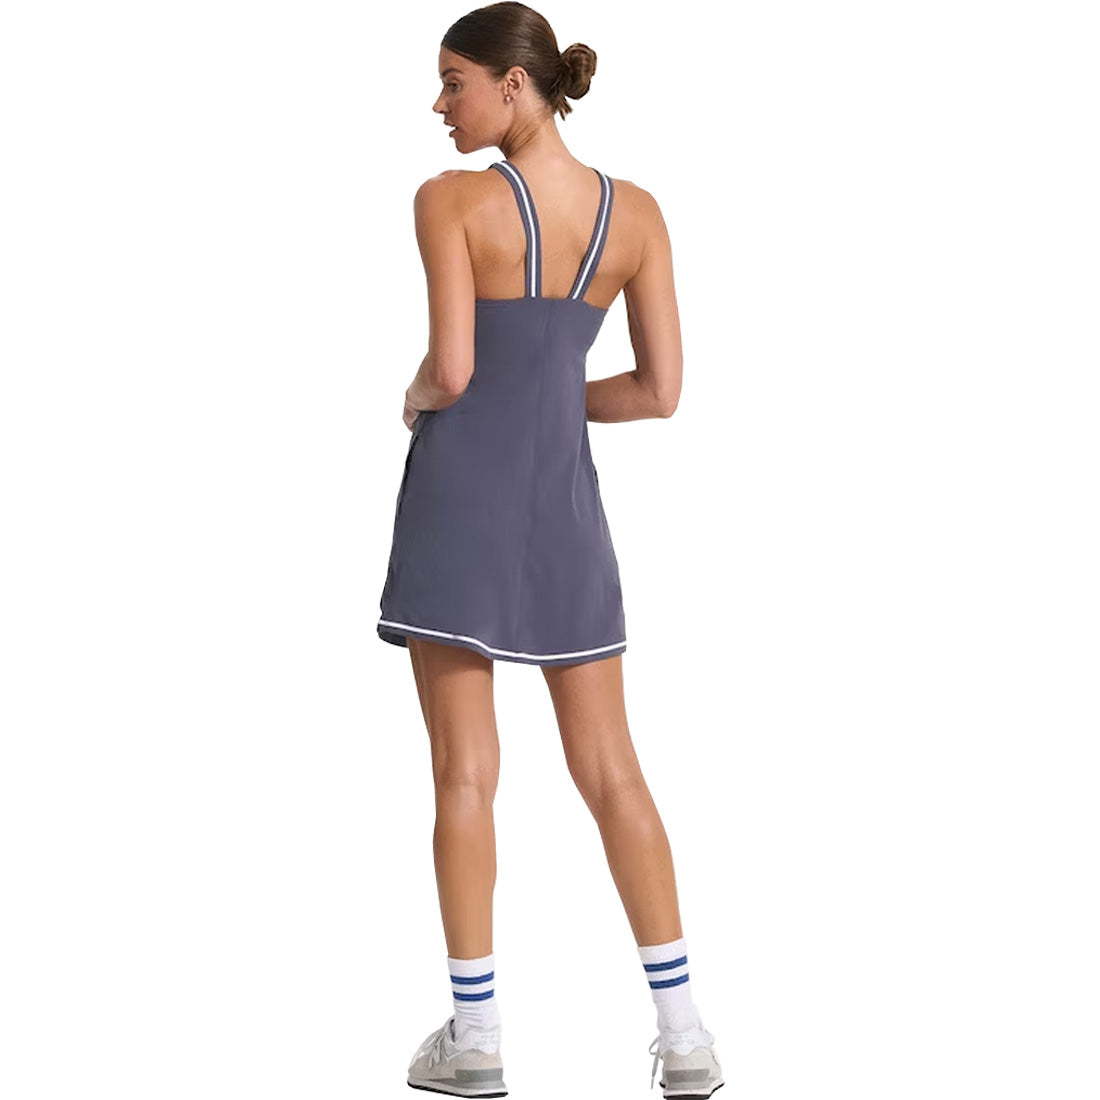 Vuori Women's Gray Volley Dress Tennis Sleeveless Built in Bra Size M  Stretch